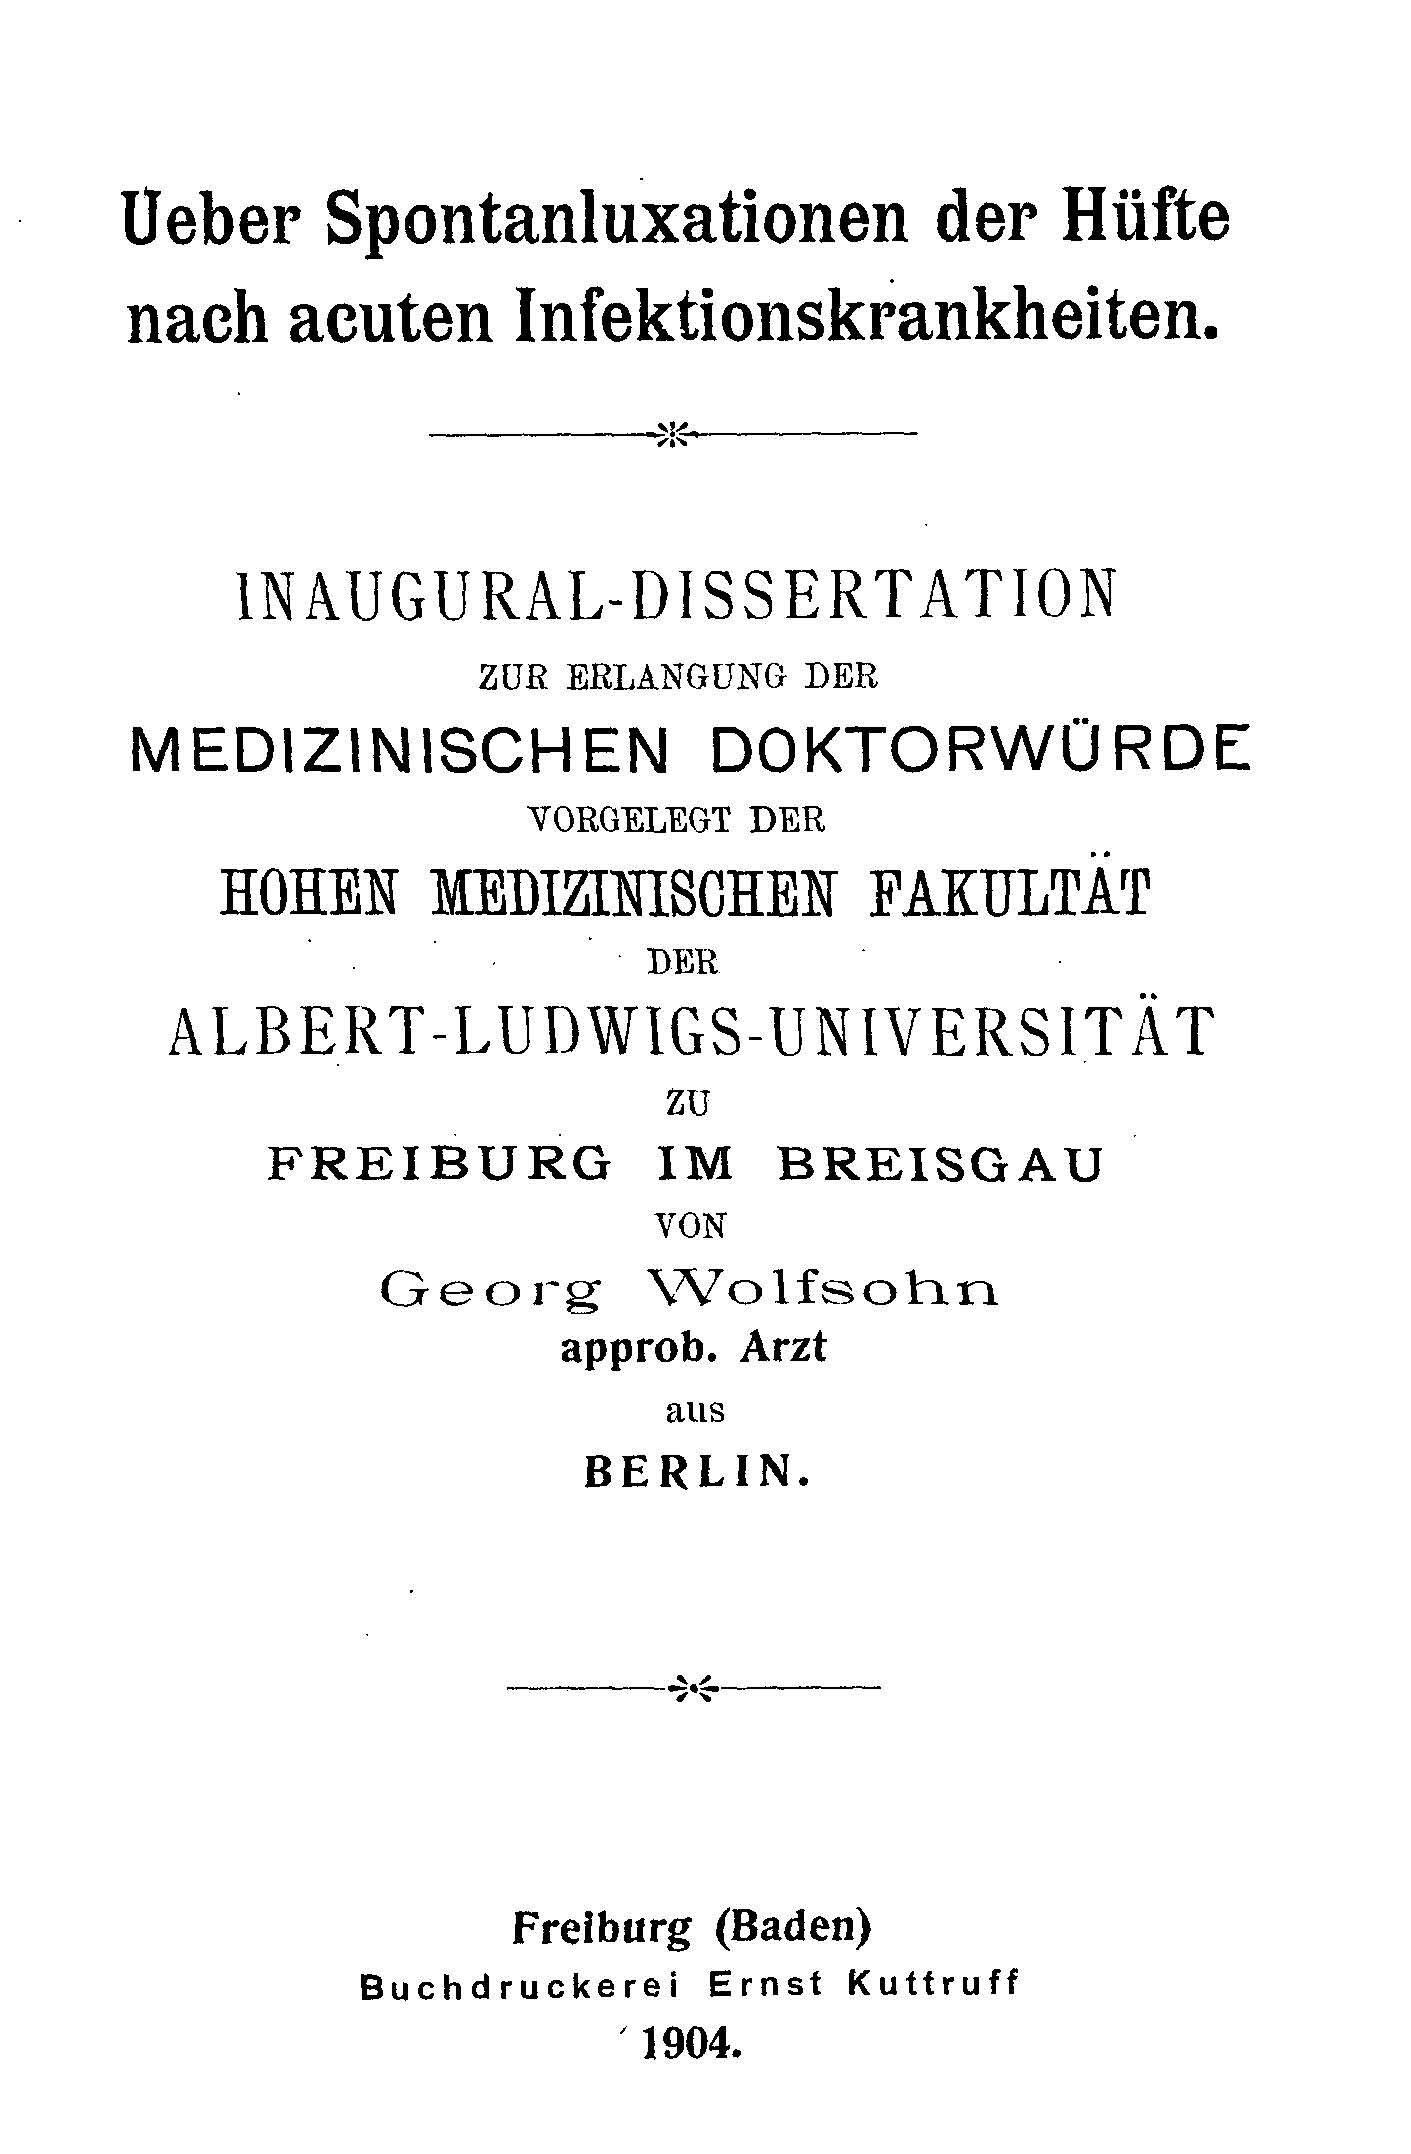 Dissertation 1904, Archive HJe